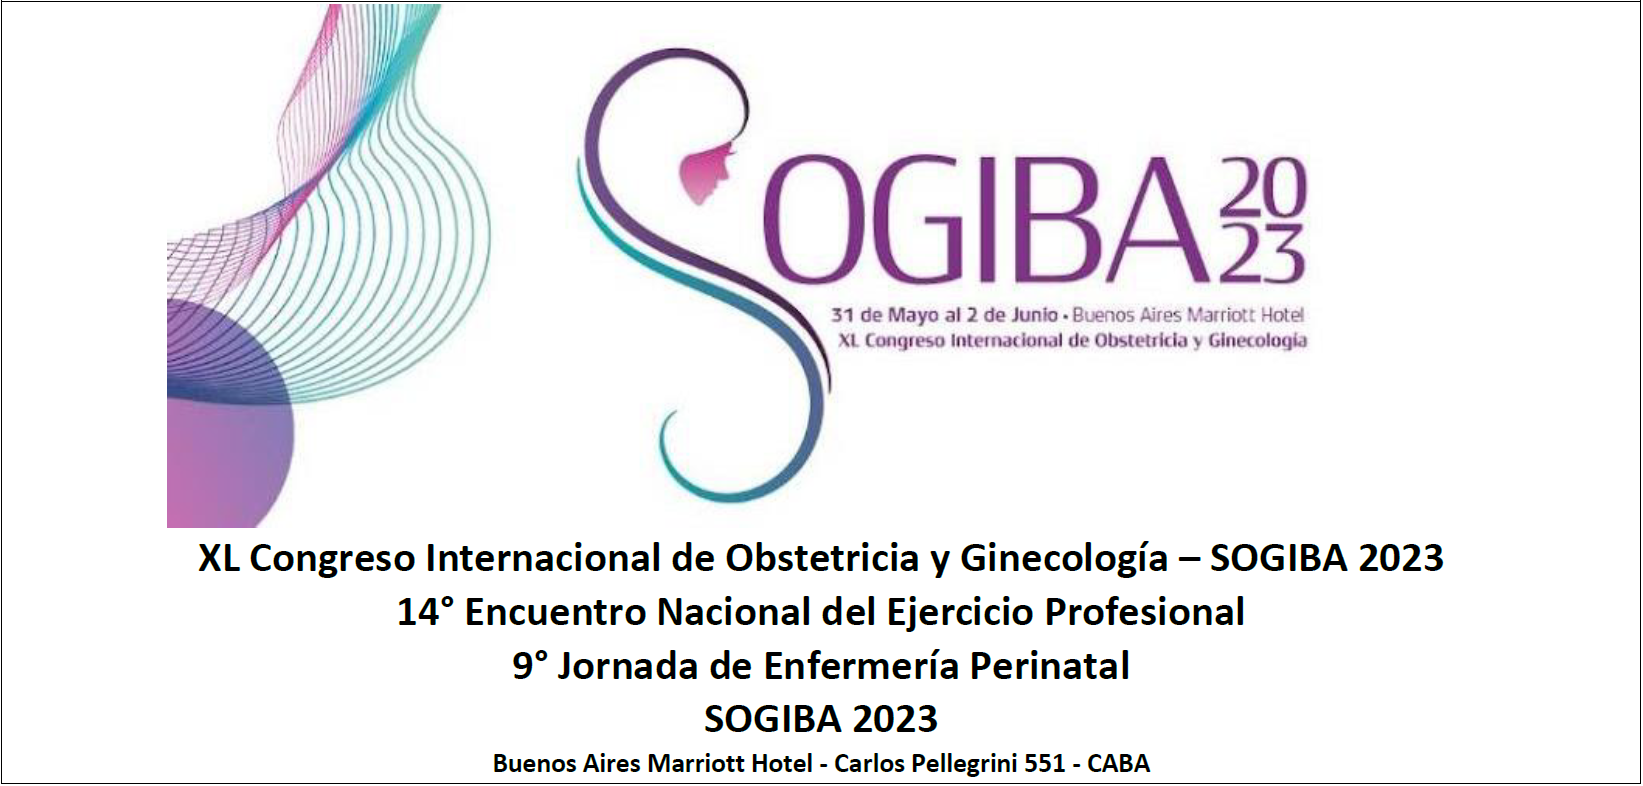 XL Congreso Internacional de Obstetricia y Ginecología SOGIBA 2023